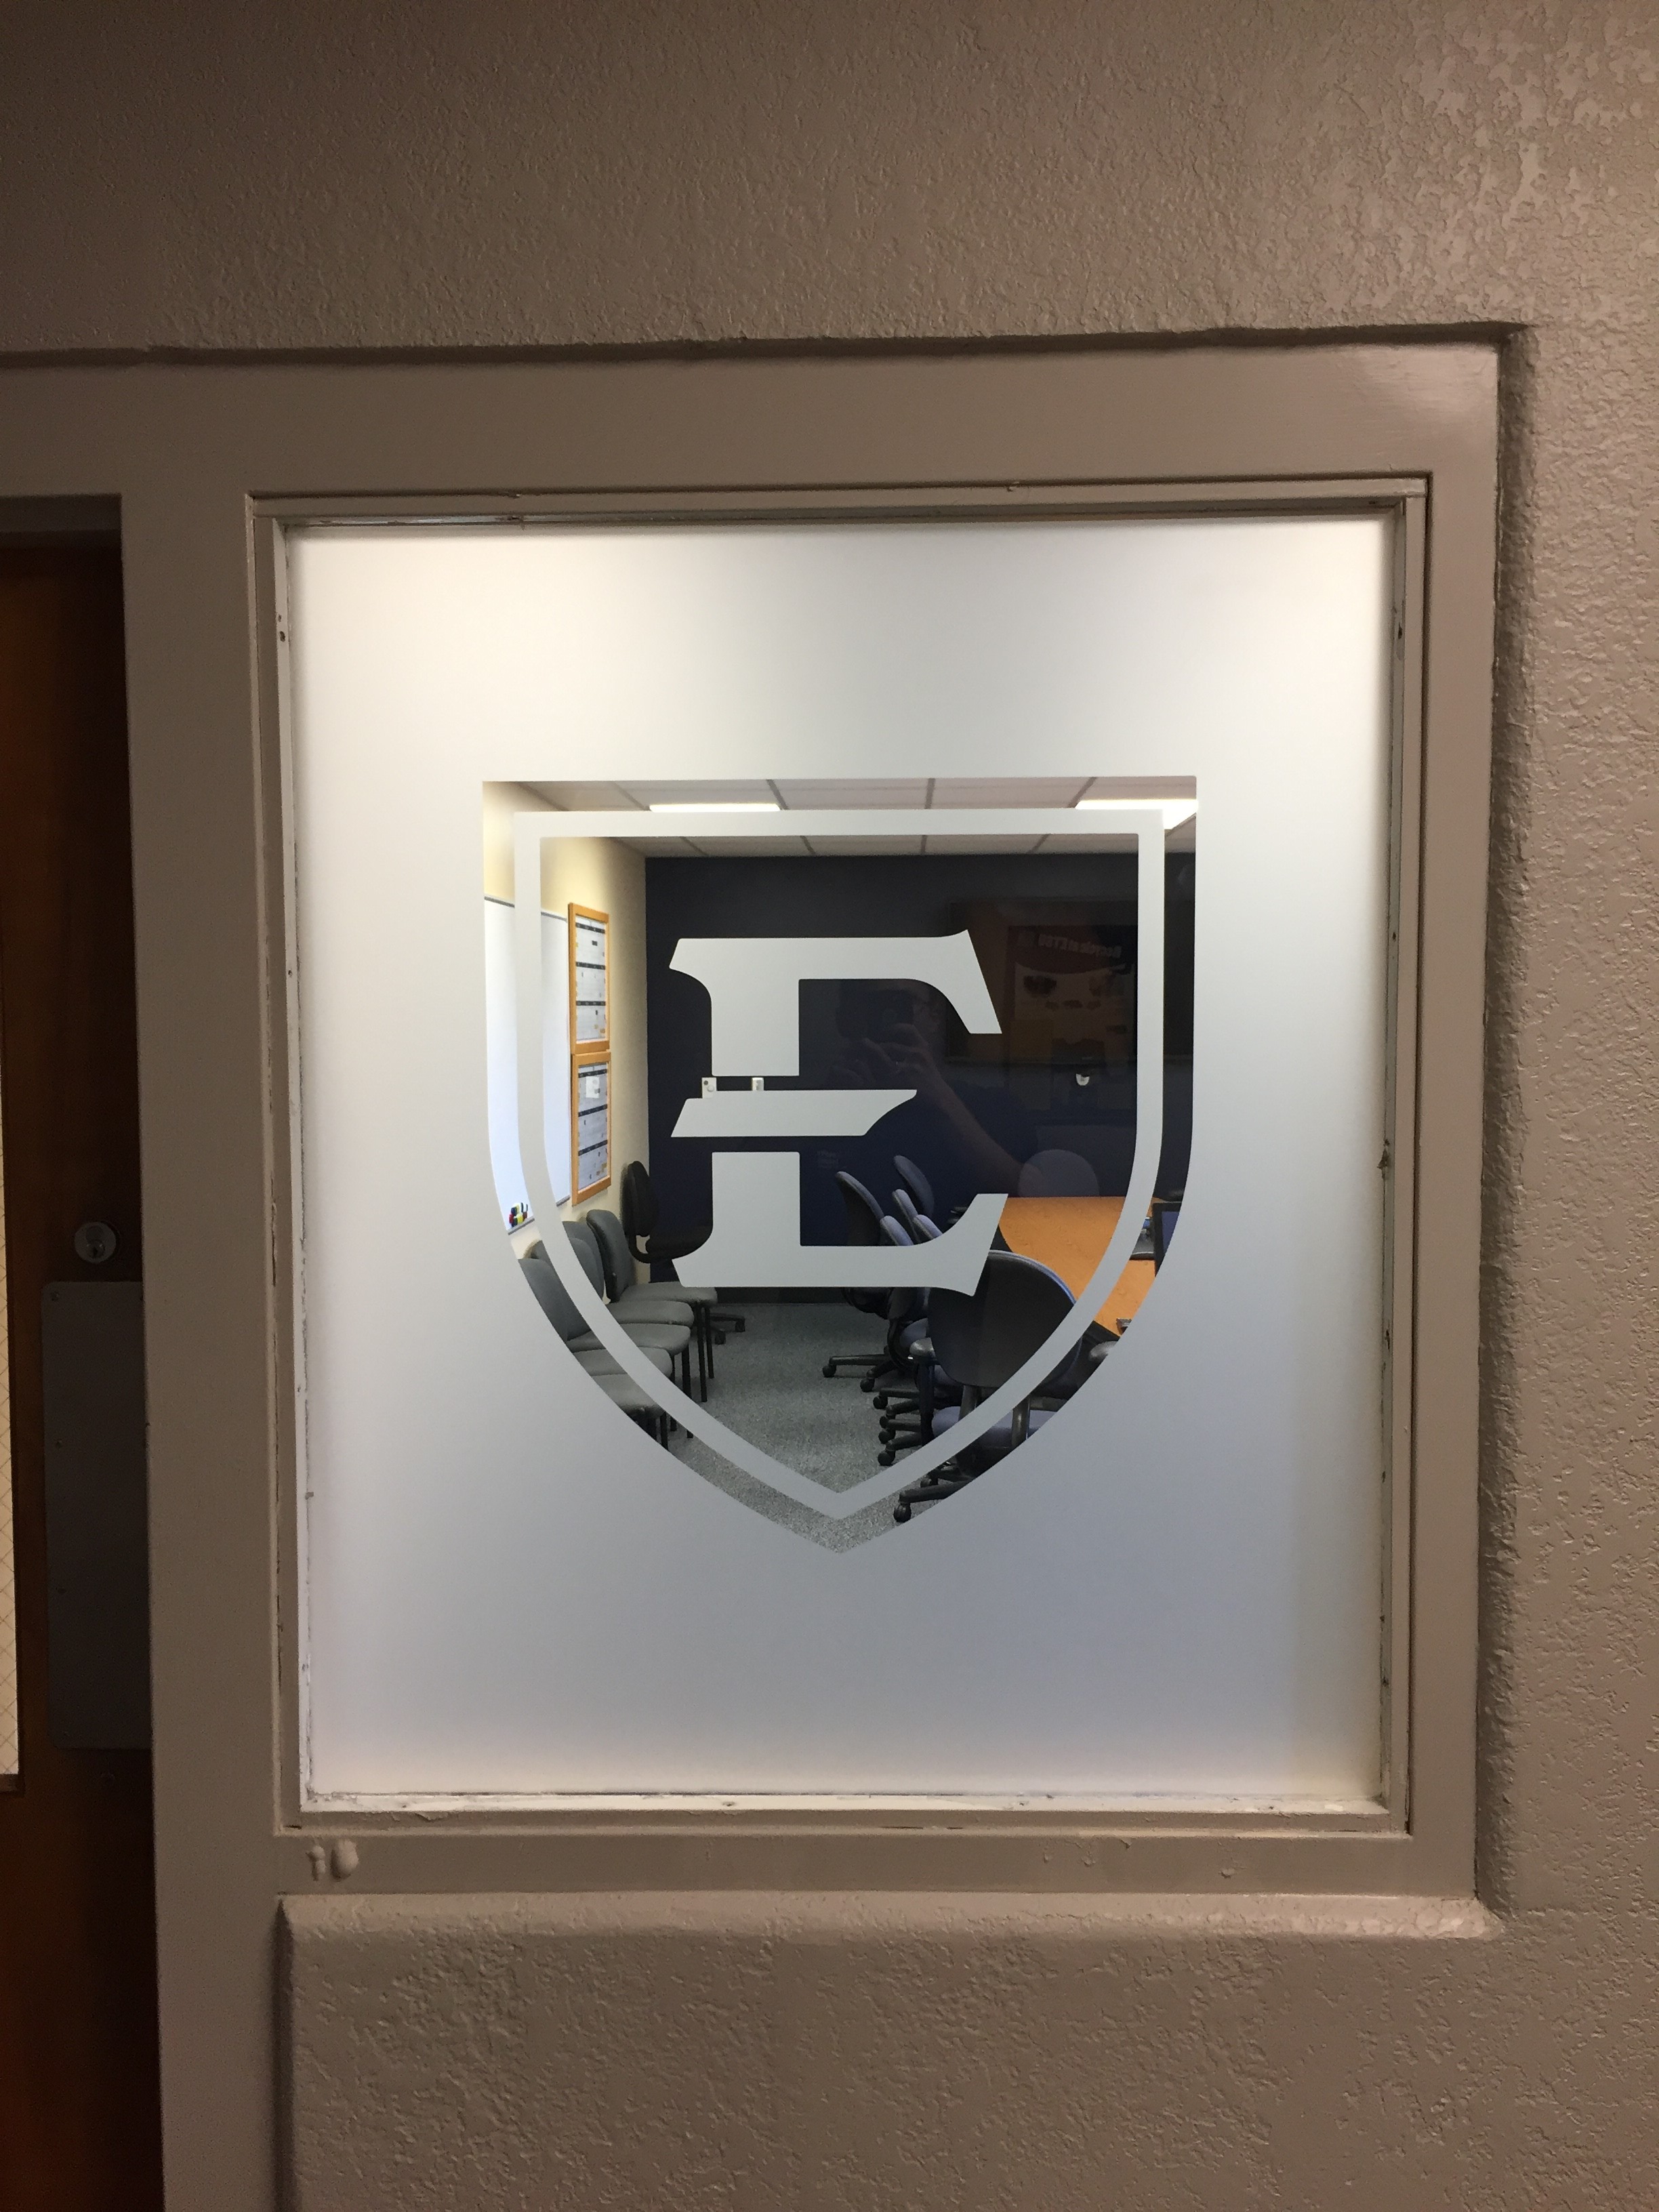 ETSU etched vinyl logo on glass window